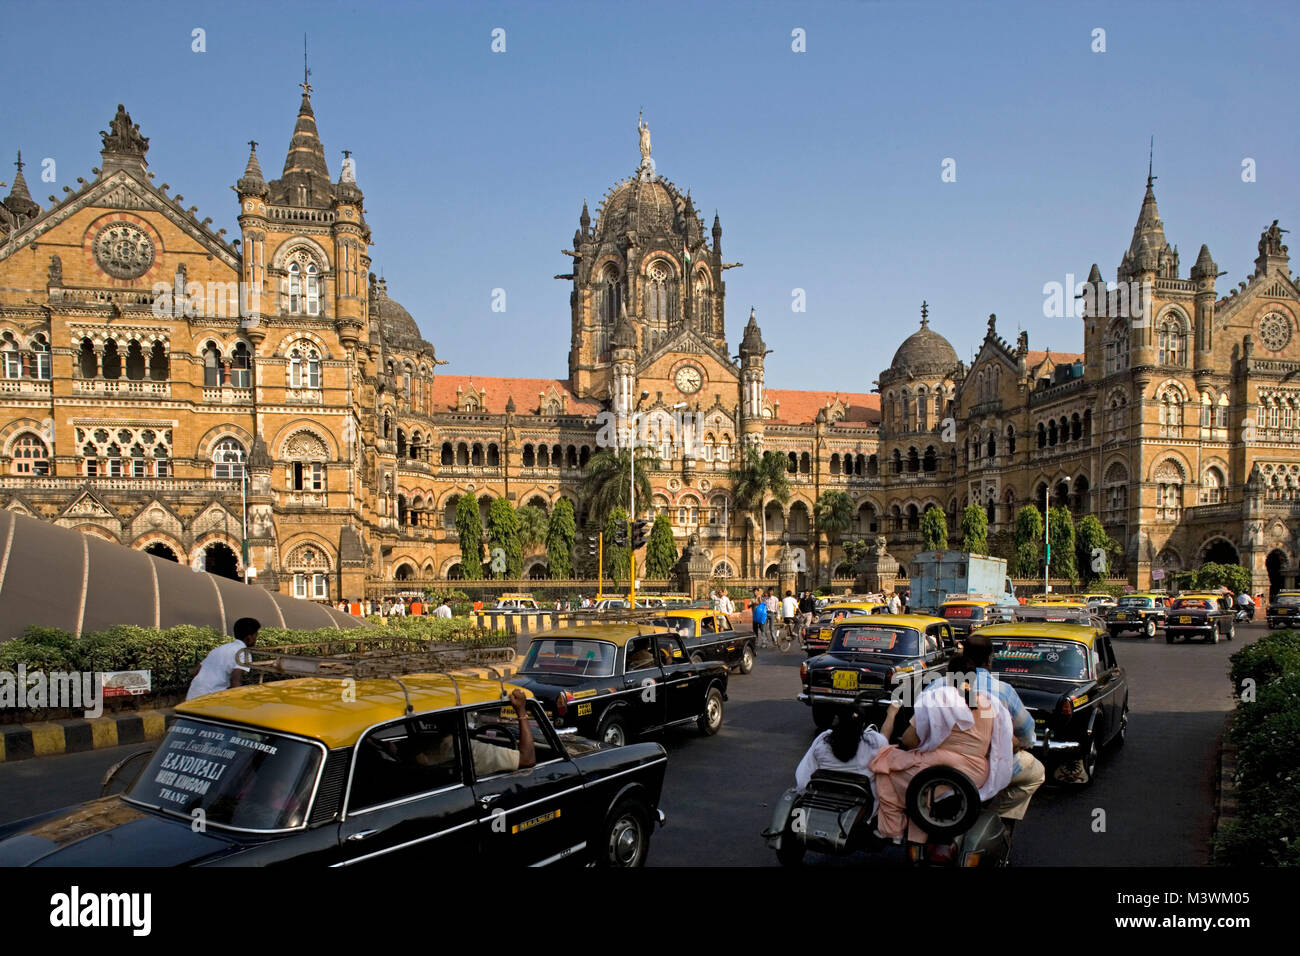 India, Mumbai, Chatrapati Shivaji Terminus (former Victoria terminus), built in Gothic style. Traffic in busy street. UNESCO World Heritage Site. Stock Photo